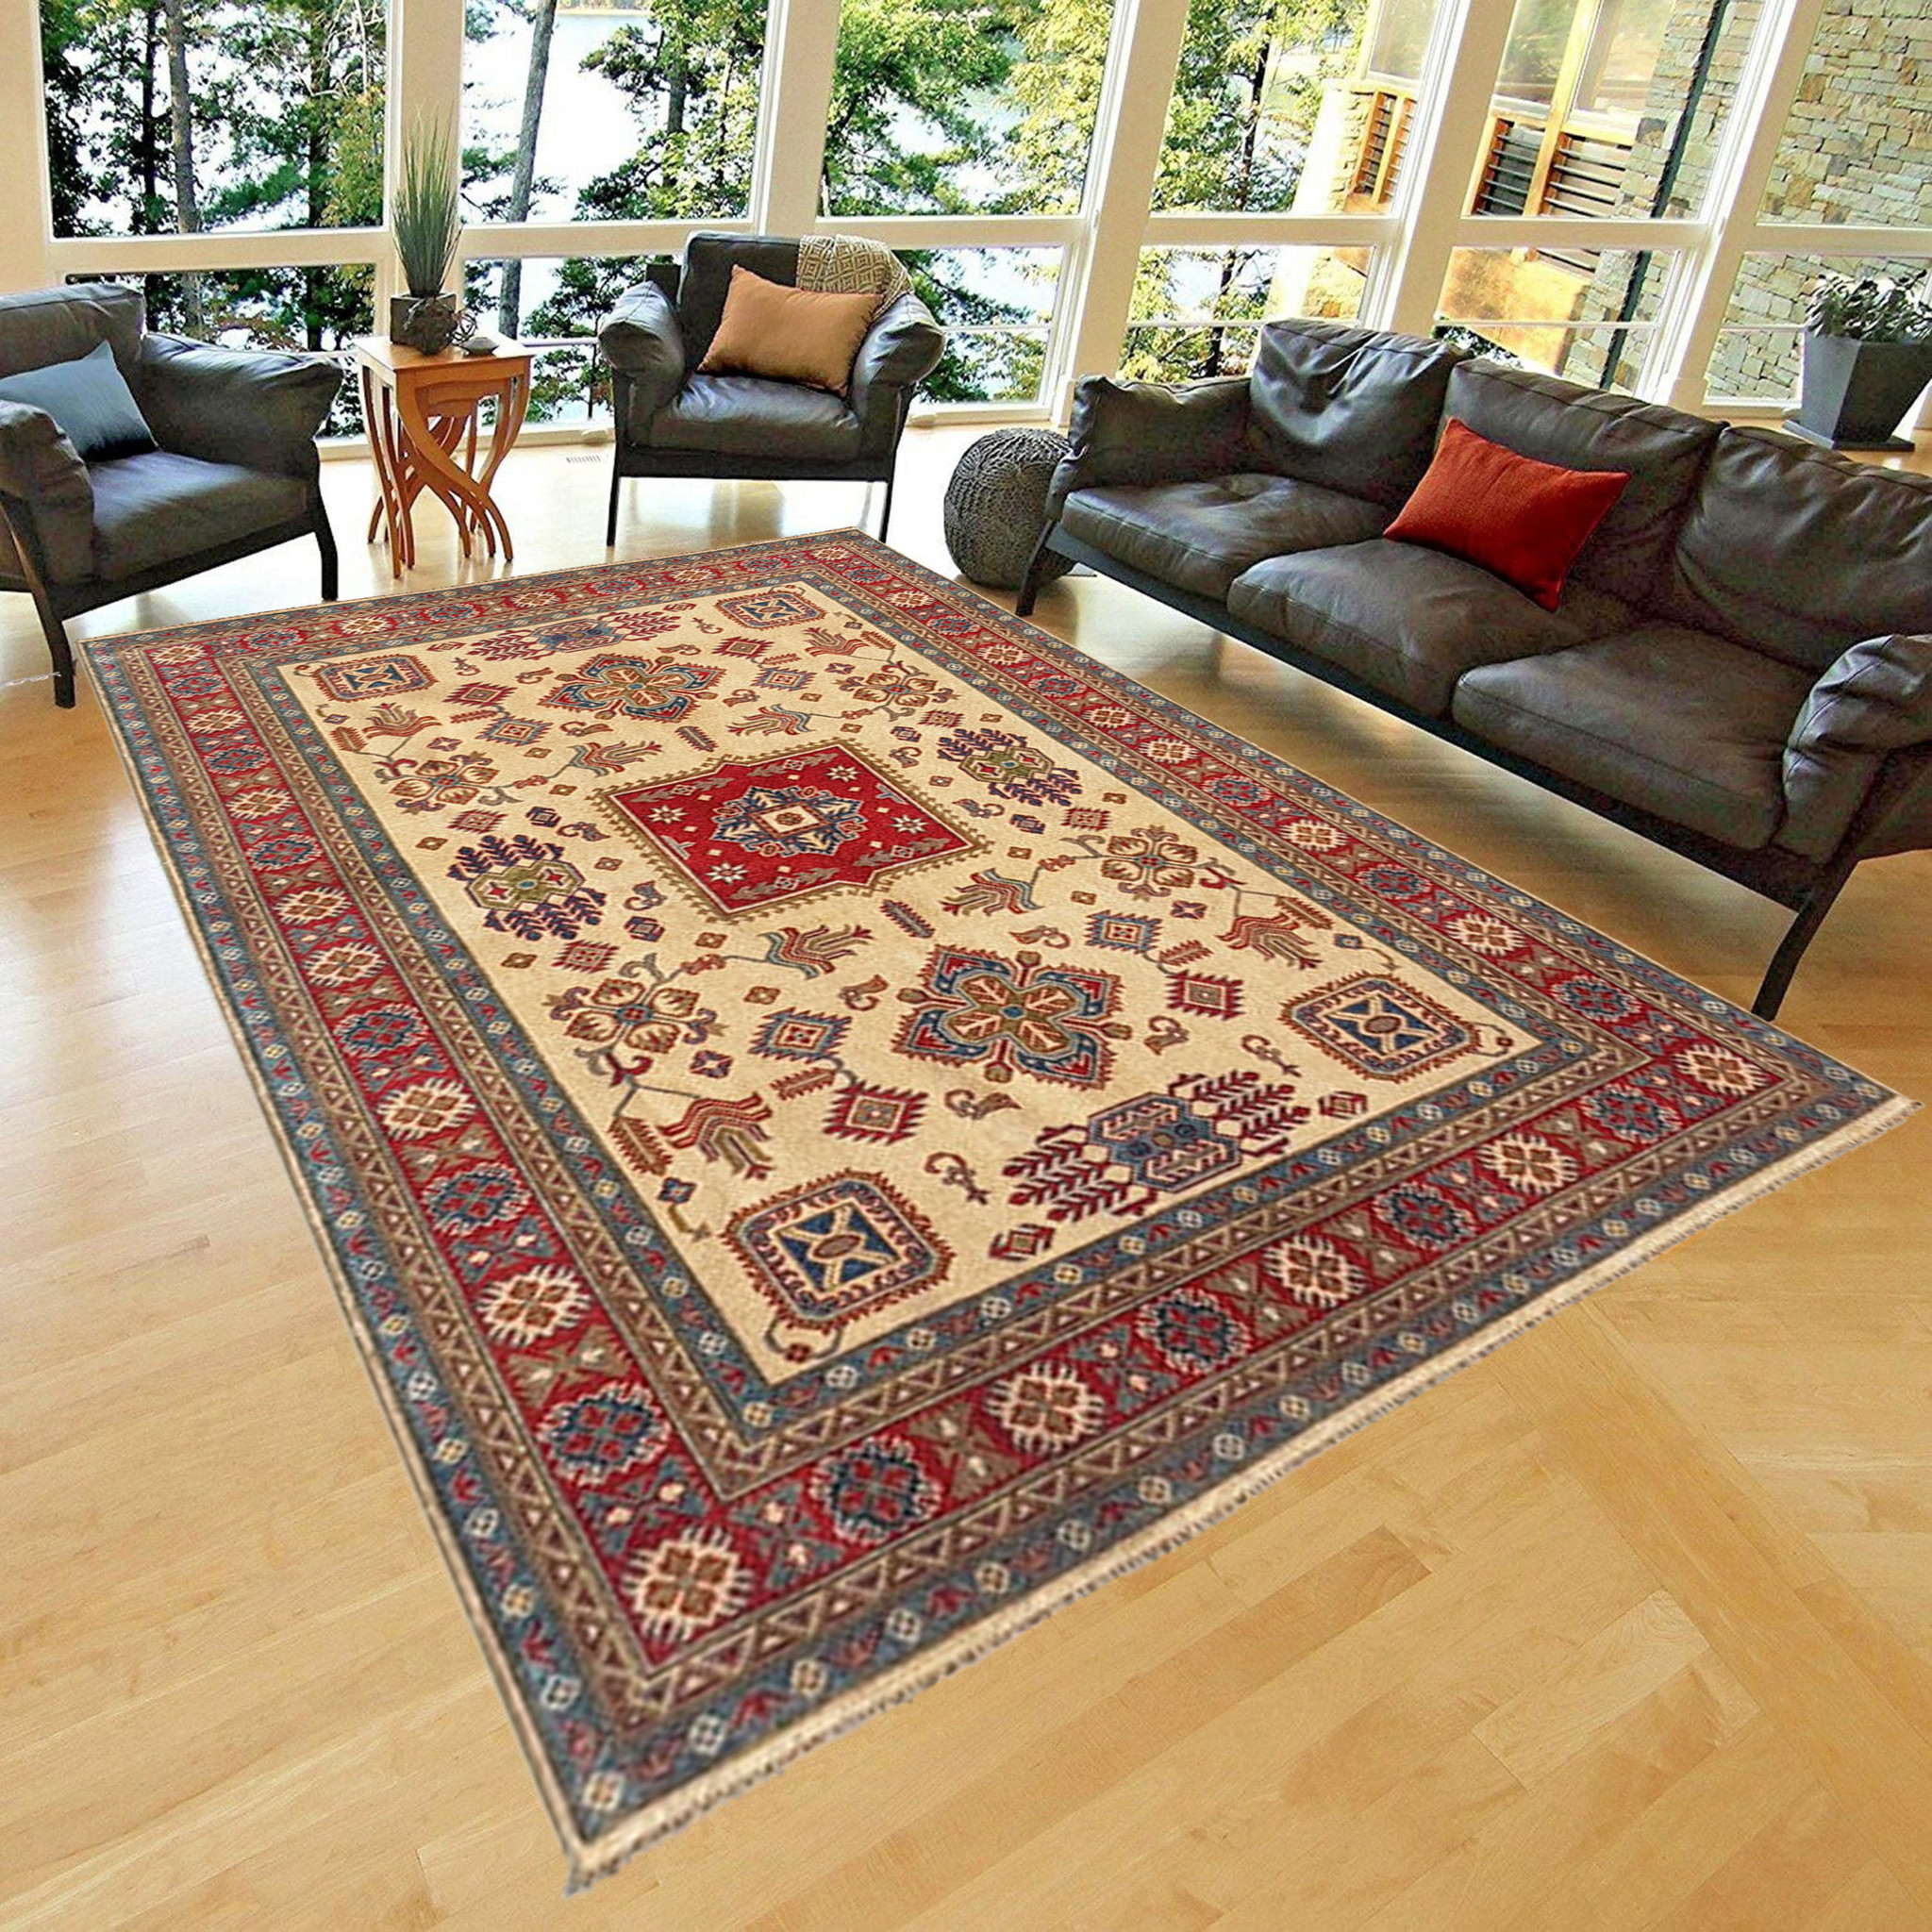 Middel Australië karbonade Handgeknoopt kazak tapijt 300x200 cm oosters kleed vloerkleed -  Kelimshop.com | online shop